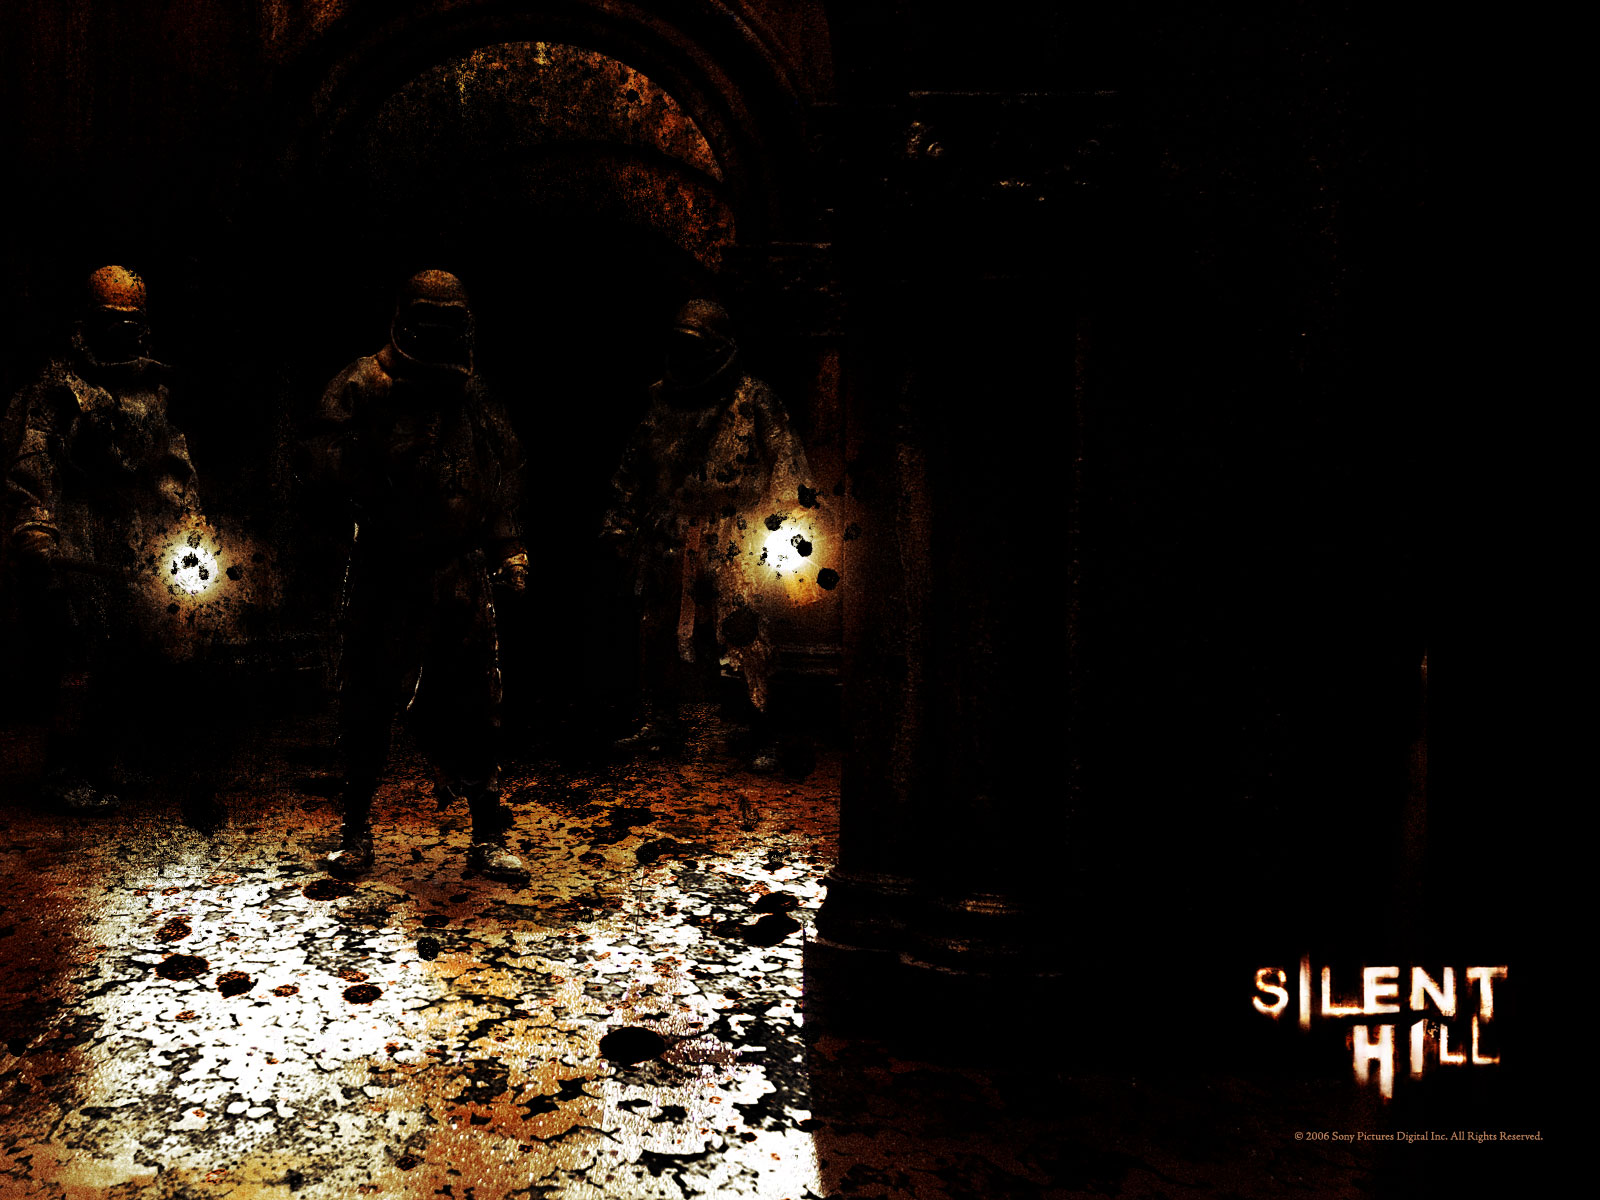 [48+] Silent Hill Wallpapers HD on WallpaperSafari